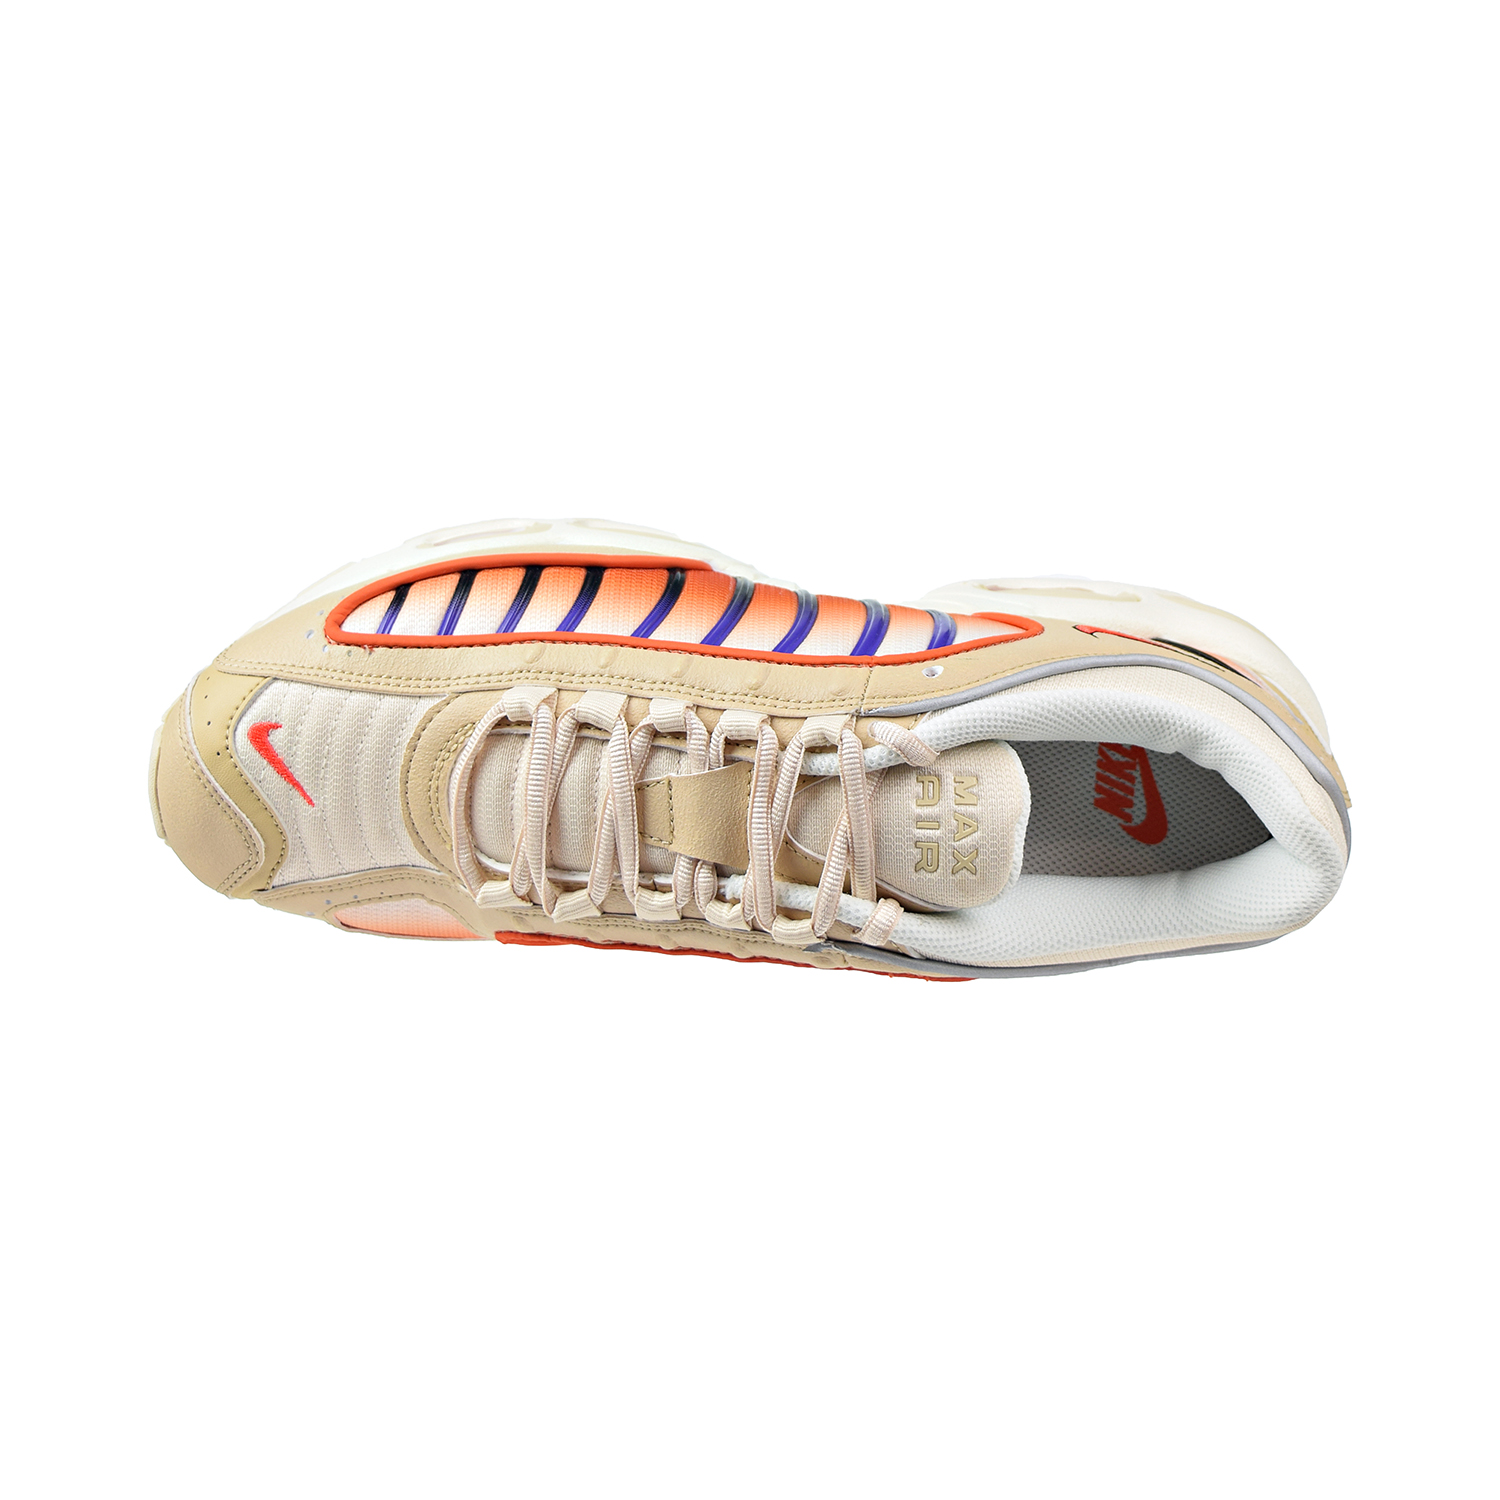 Nike Air Max Tailwind IV Men's Shoes Desert Ore/Team Orange  aq2567-200 - image 5 of 6